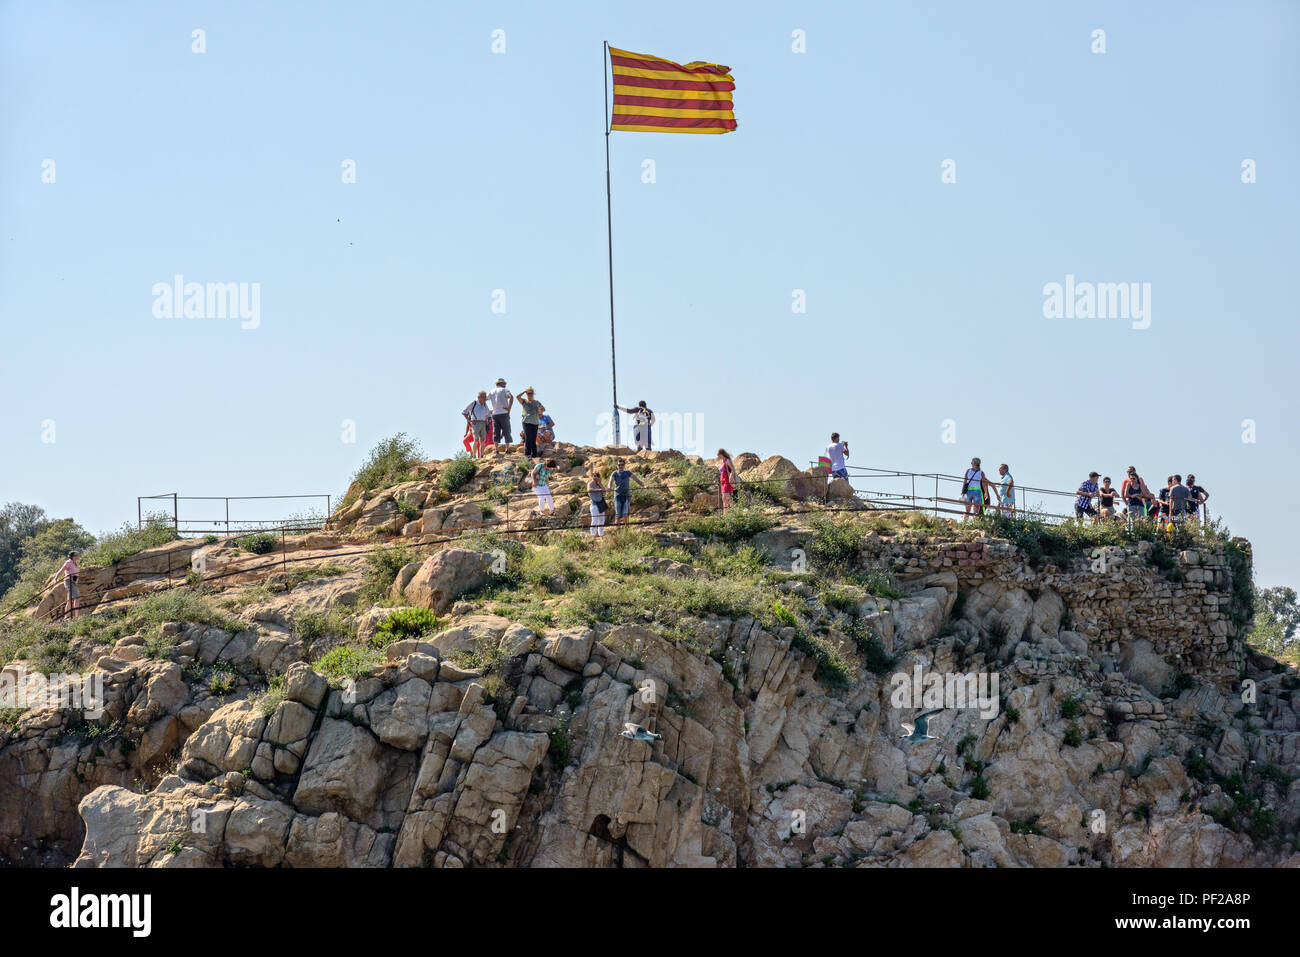 Tourists are near Senyera flag on the mast on top of Sa Palomera Rock in Blanes, Costa Brava coast in Catalonia, Spain. Stock Photo